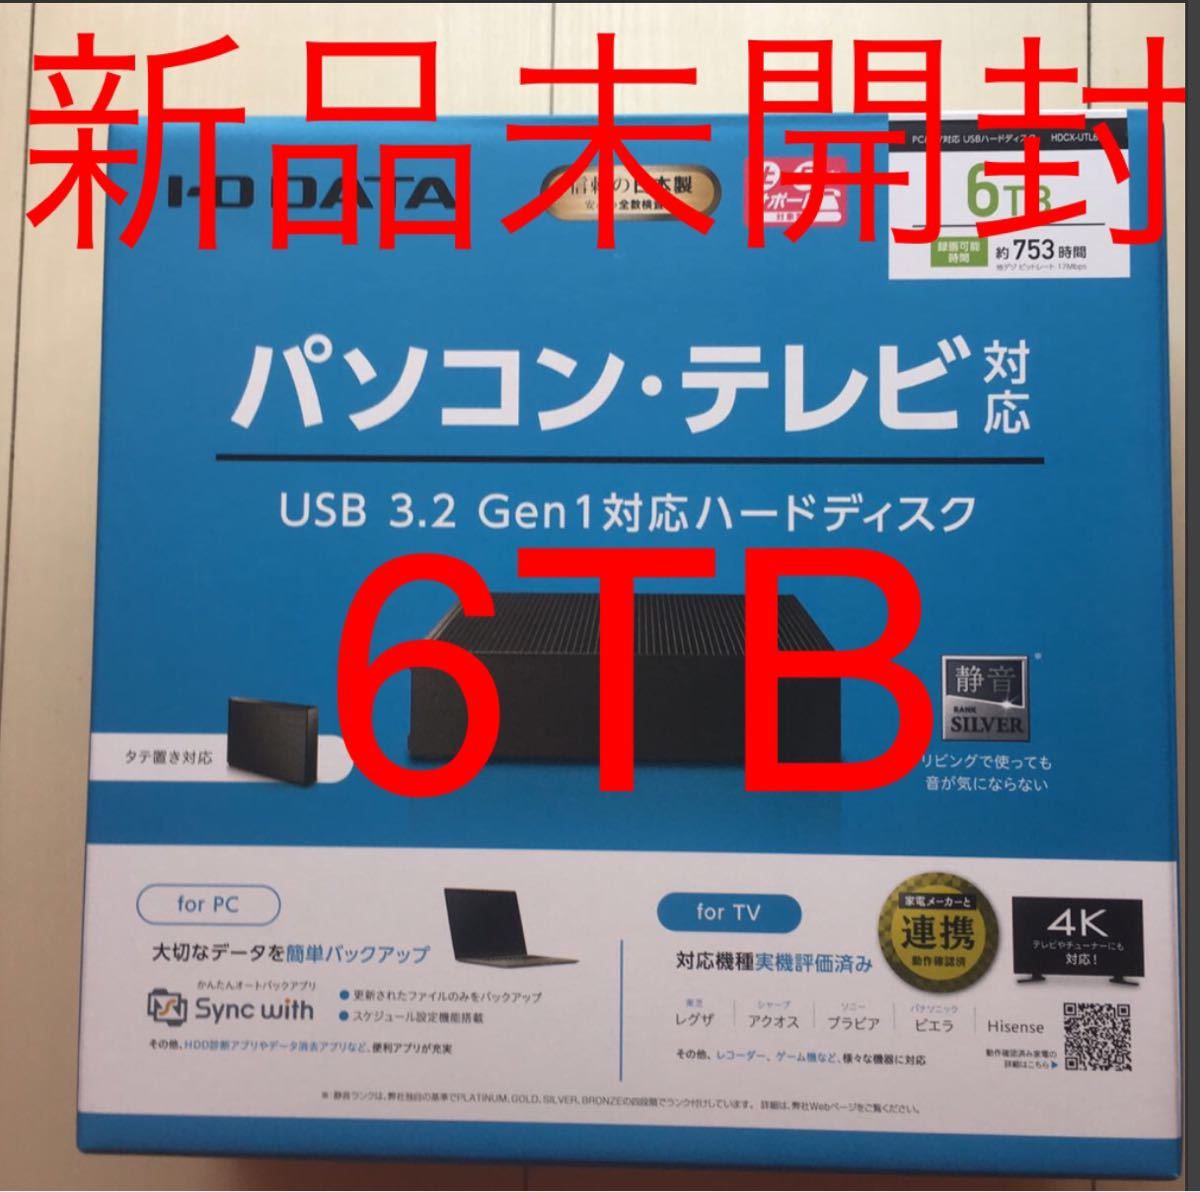 I-O DATA 外付けハードディスクHDCX-UTL6K